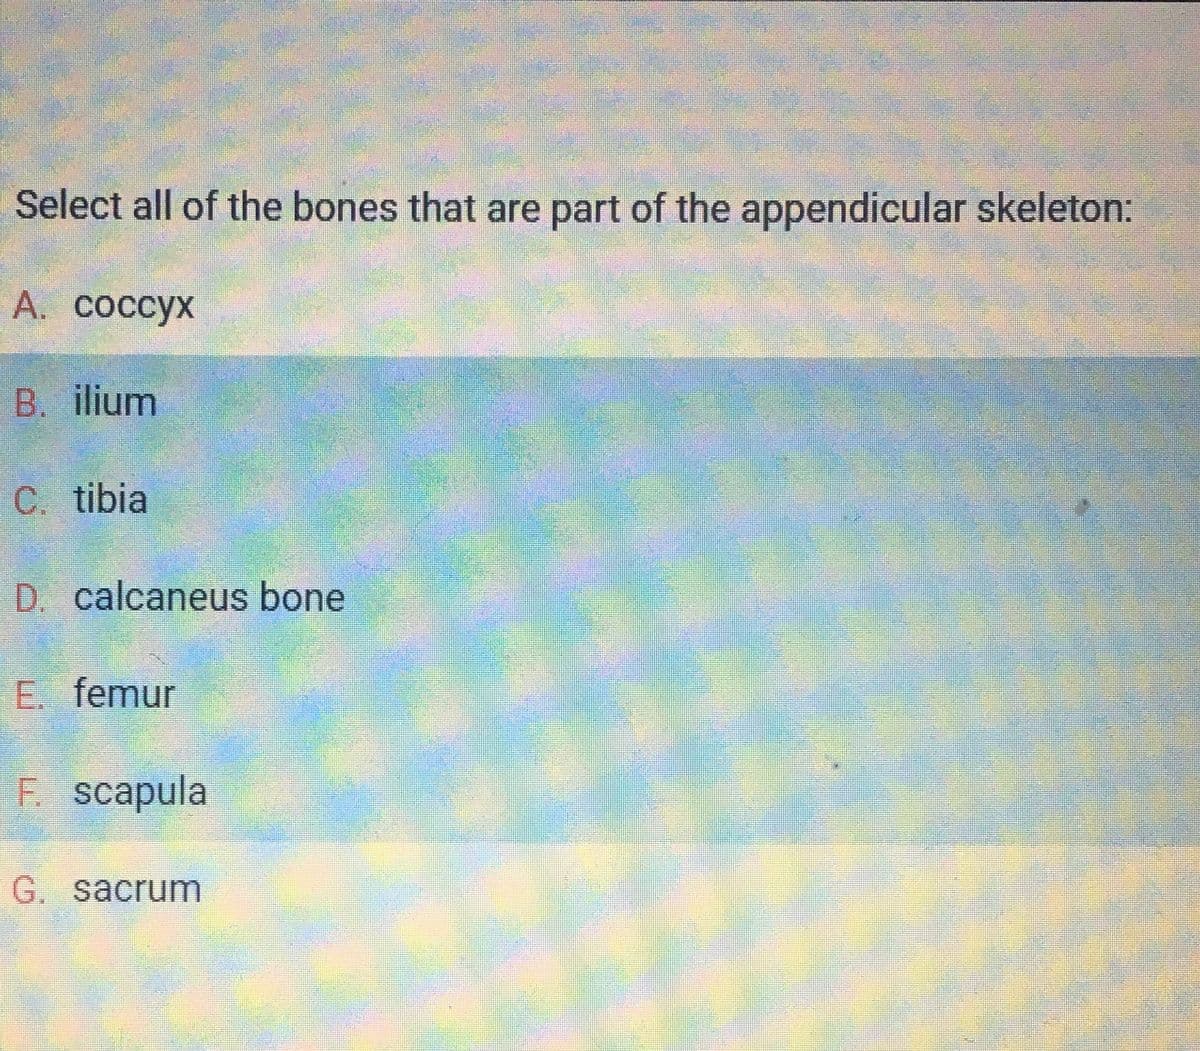 Select all of the bones that are part of the appendicular skeleton:
A. coccyx
B. ilium
C. tibia
D. calcaneus bone
E. femur
F. scapula
G. sacrum